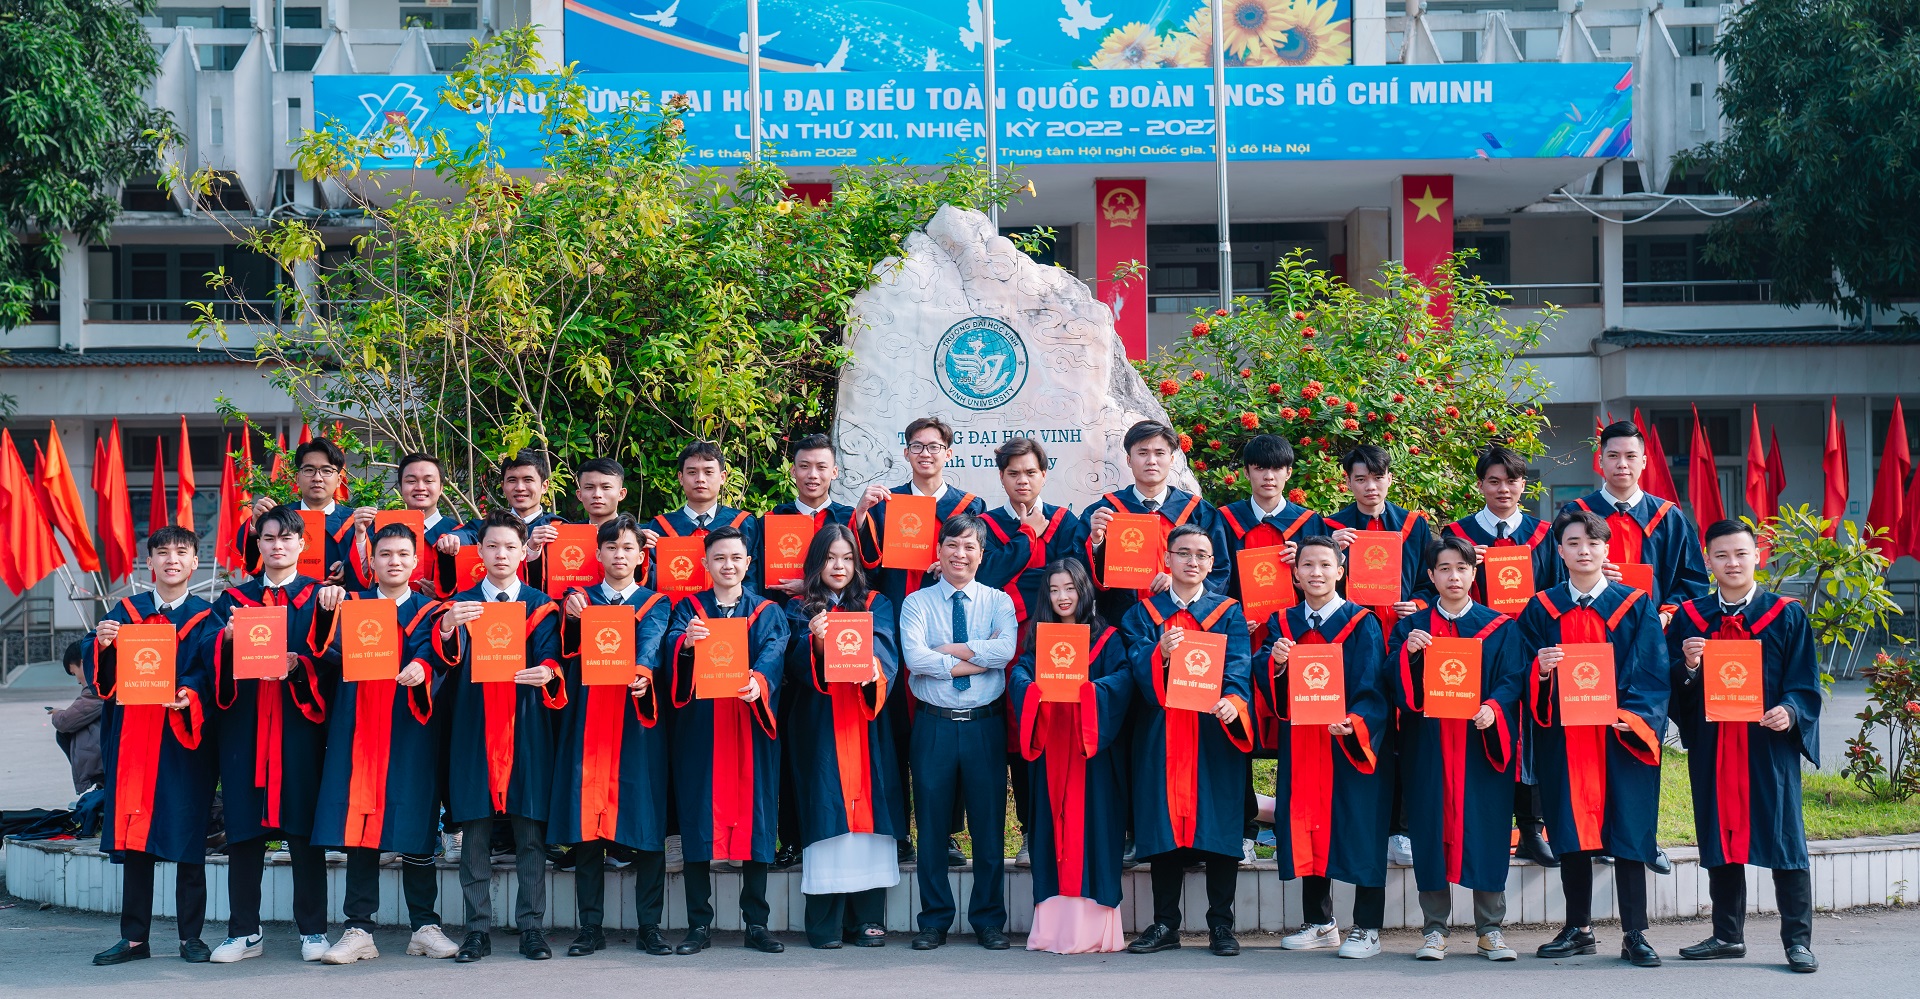 Vinh University Image